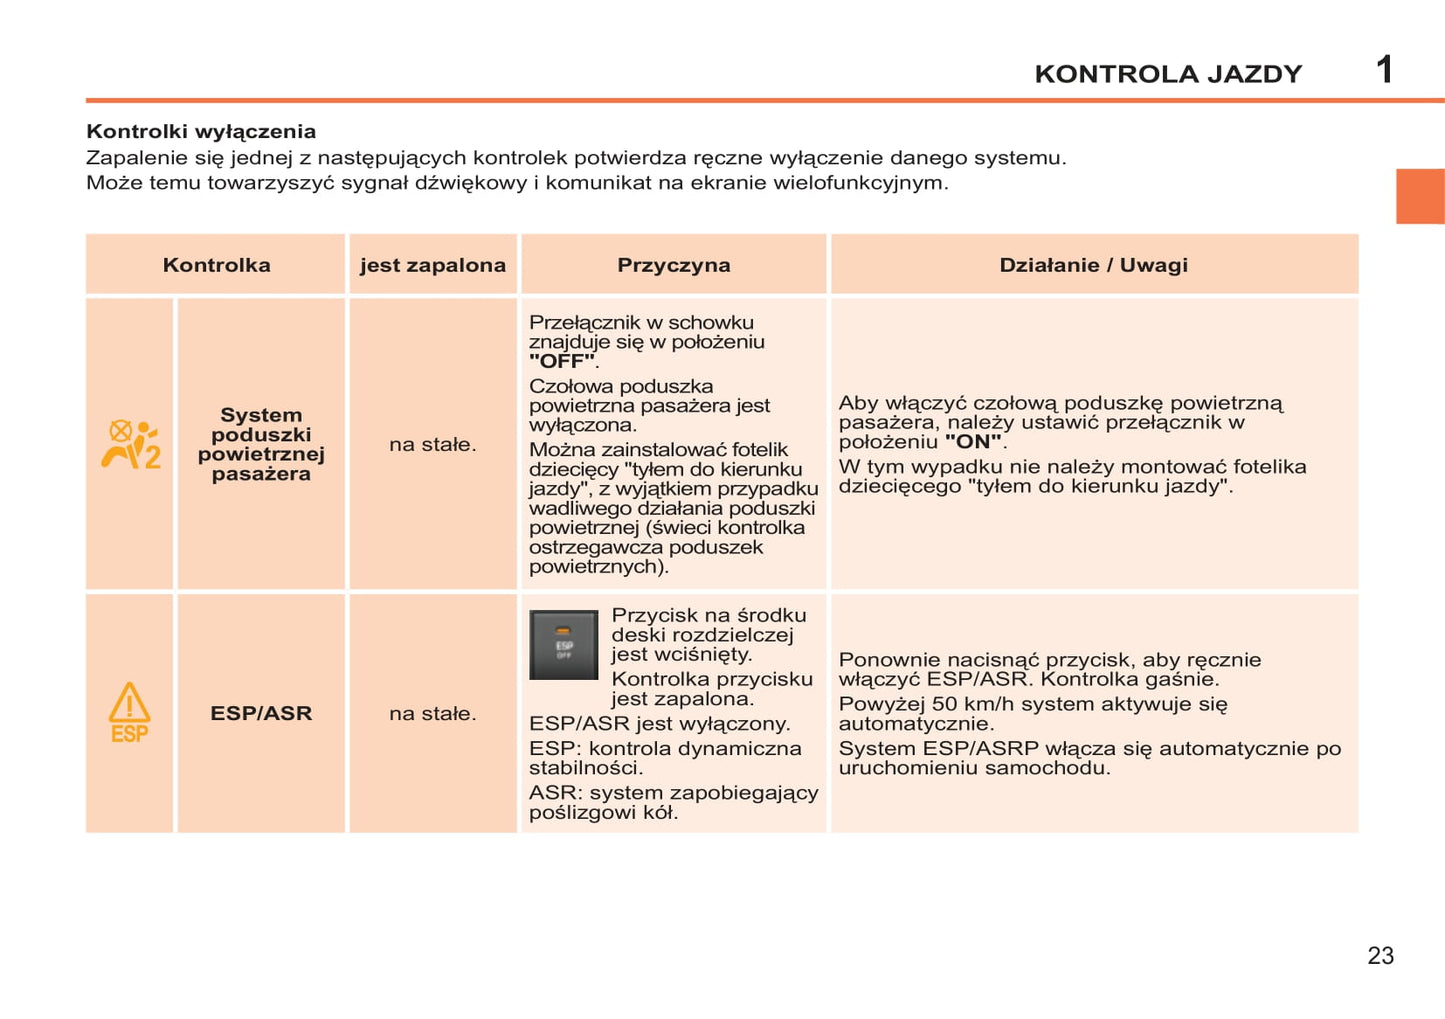 2014-2015 Peugeot 207 CC Owner's Manual | Polish